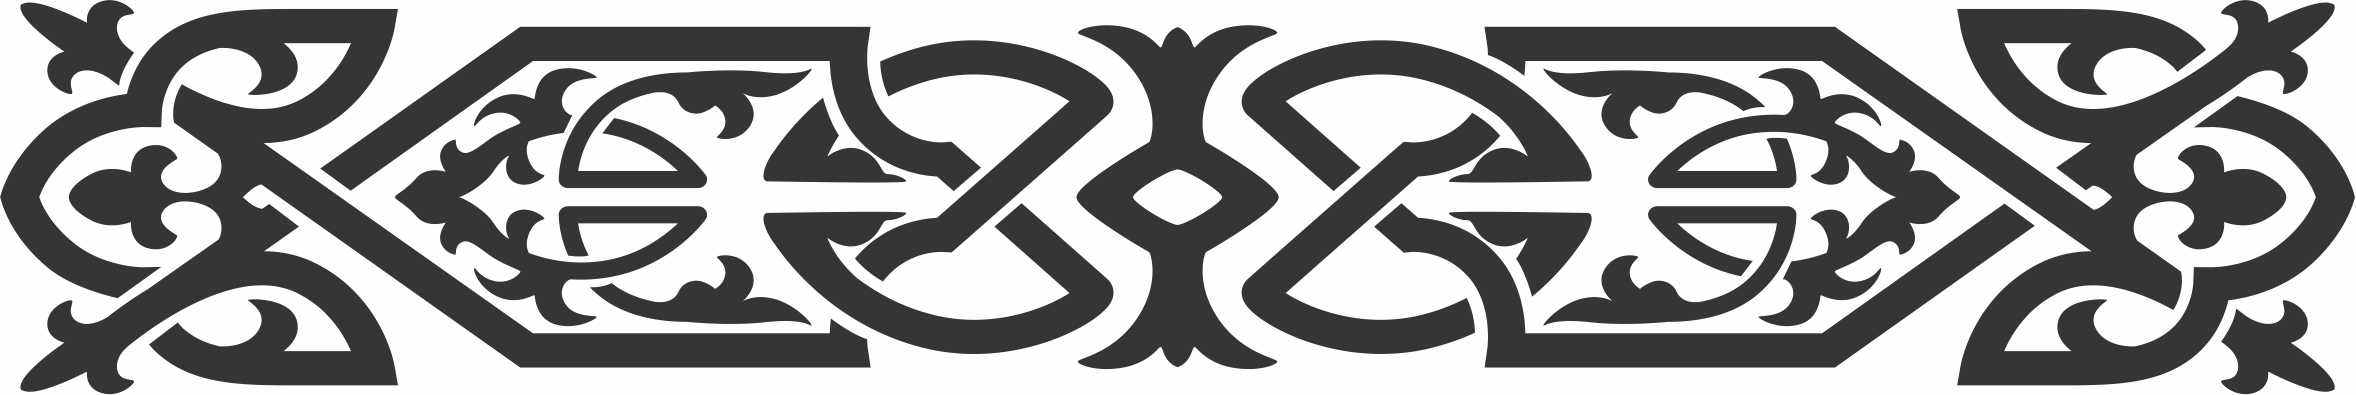 Design Border Free DXF File